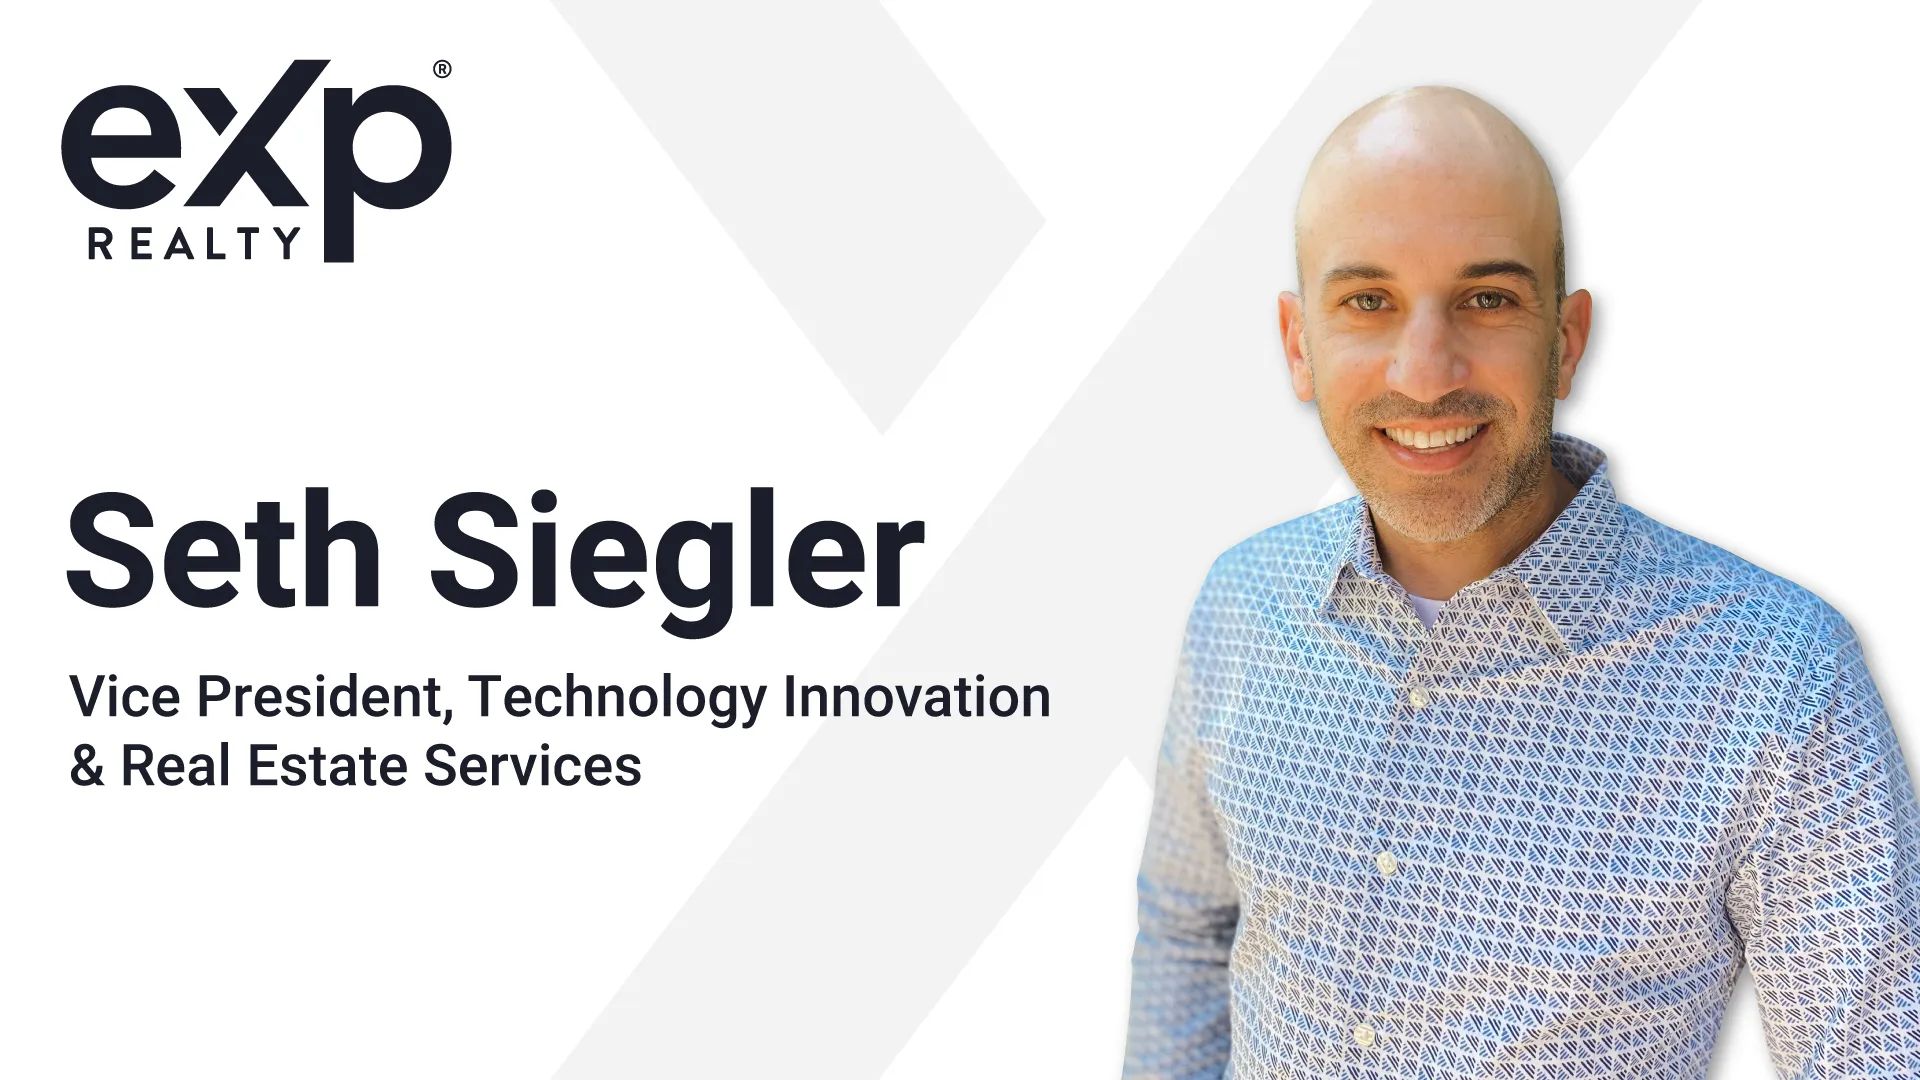 Seth Siegler, Vice President, Technology Innovation & Real Estate Services